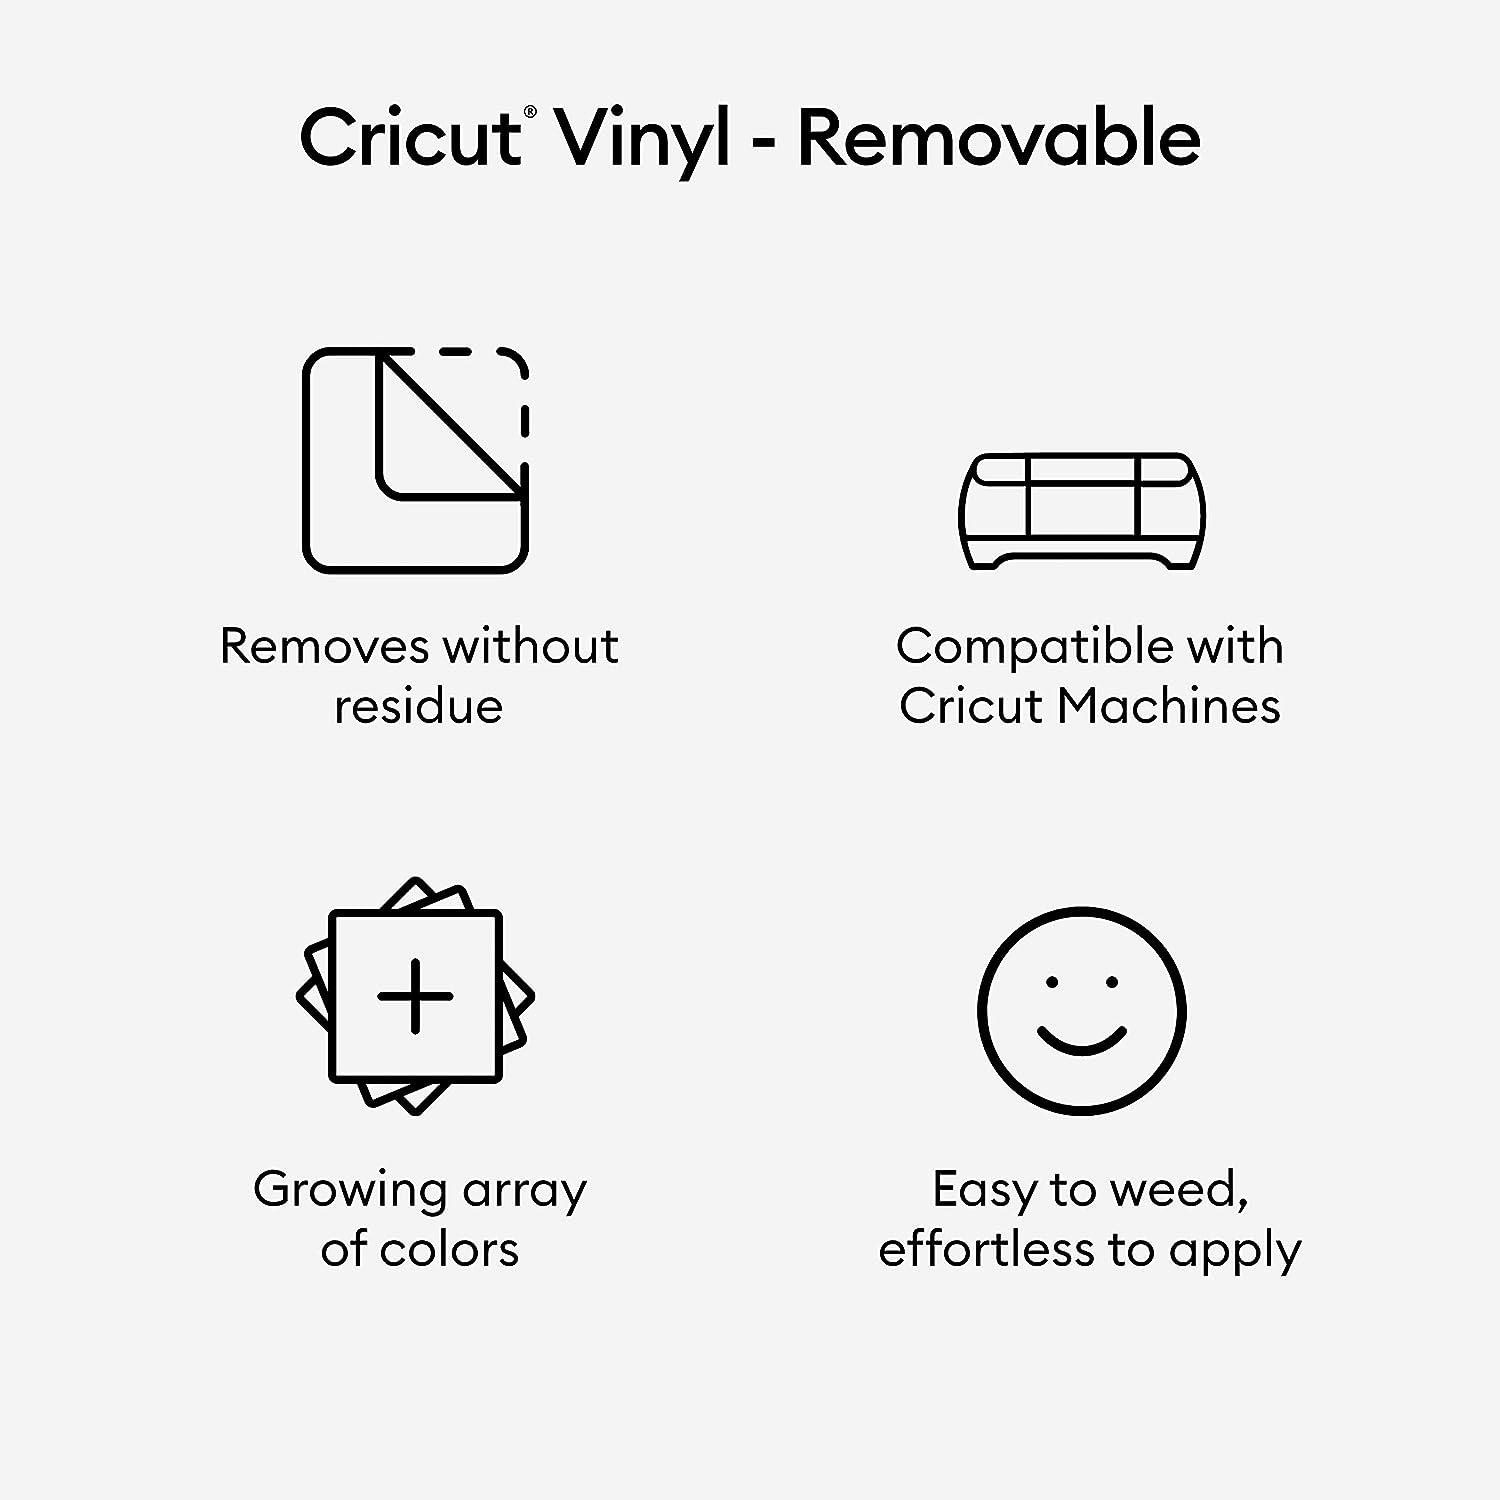 Cricut Bulk Premium Vinyl | White | Removable | 30 ft